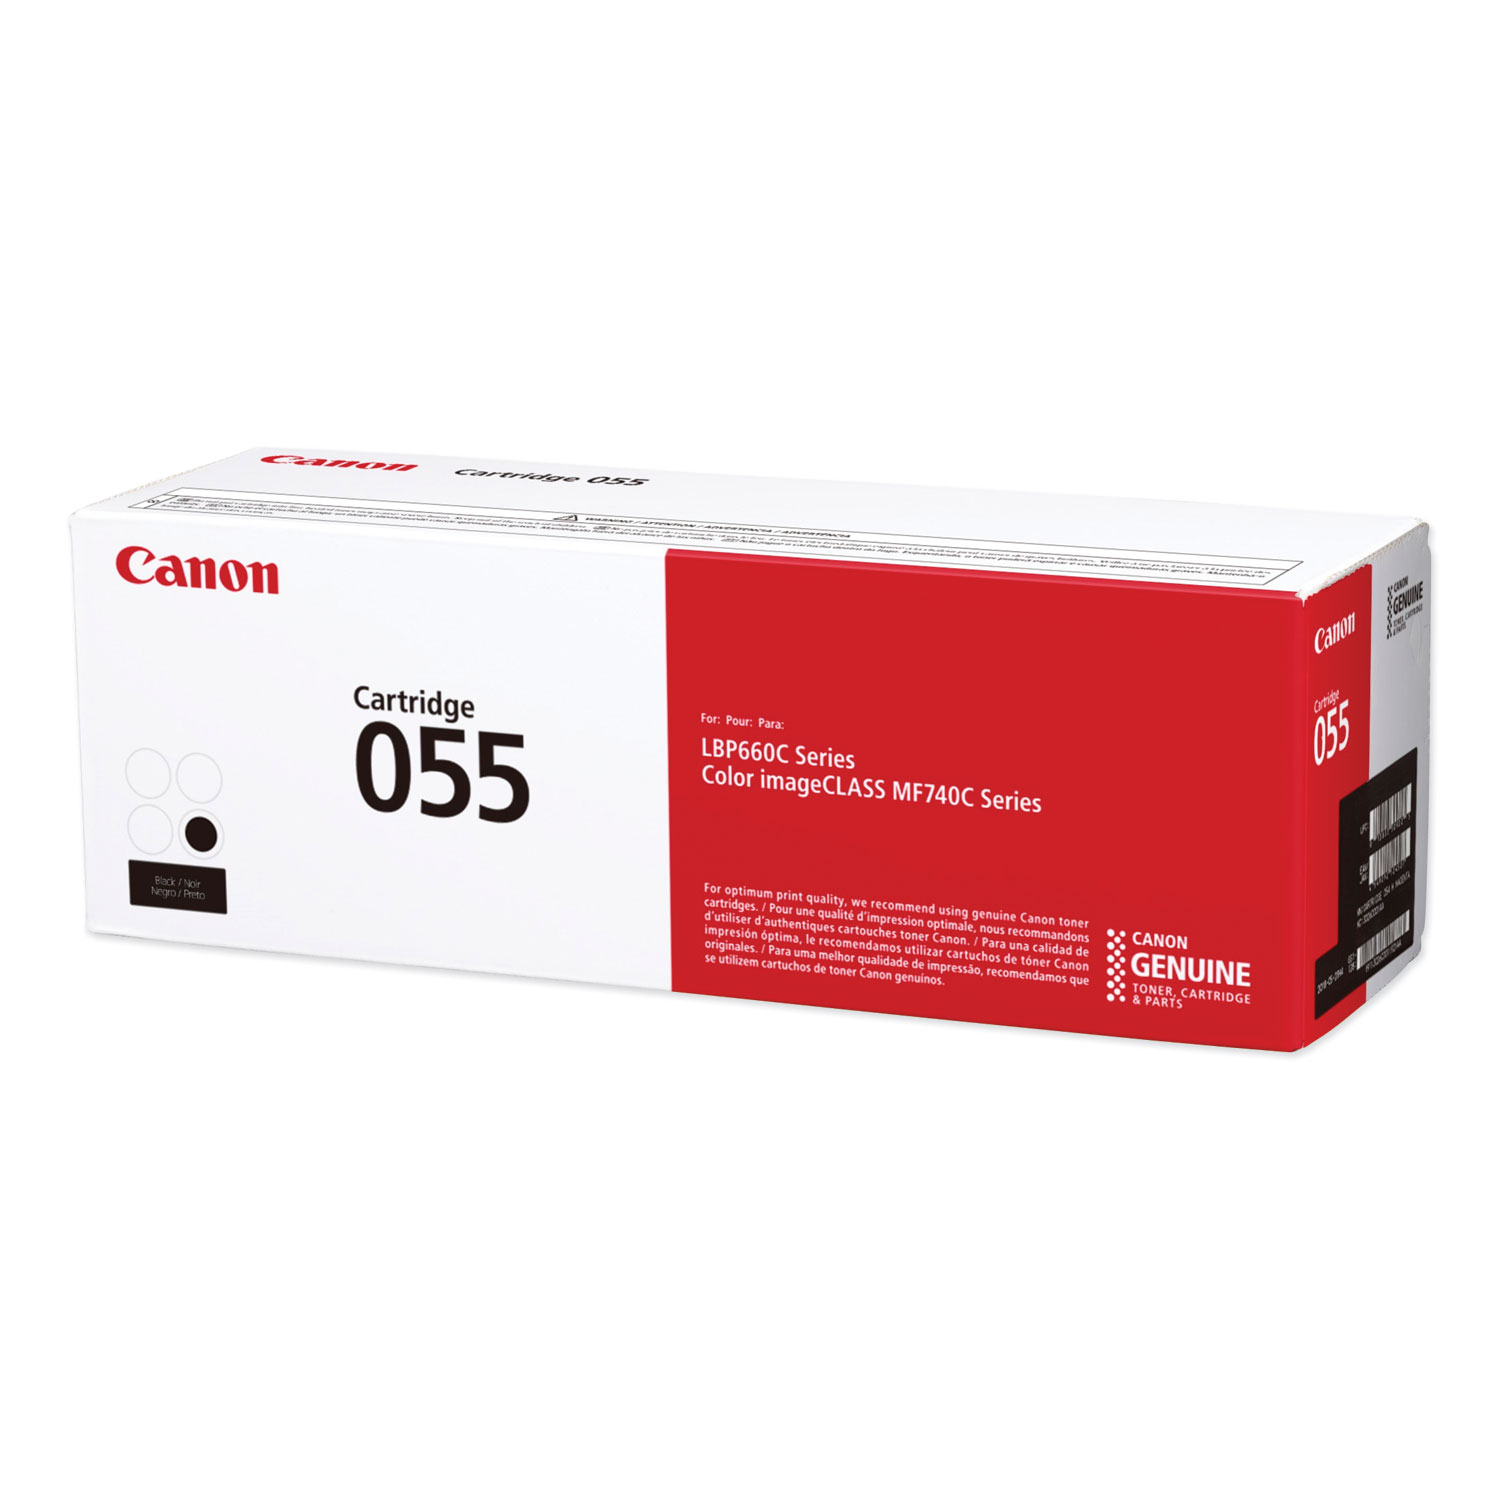  Canon 3016C001 3016C001 (055) Toner, 2,300 Page-Yield, Black (CNM3016C001) 